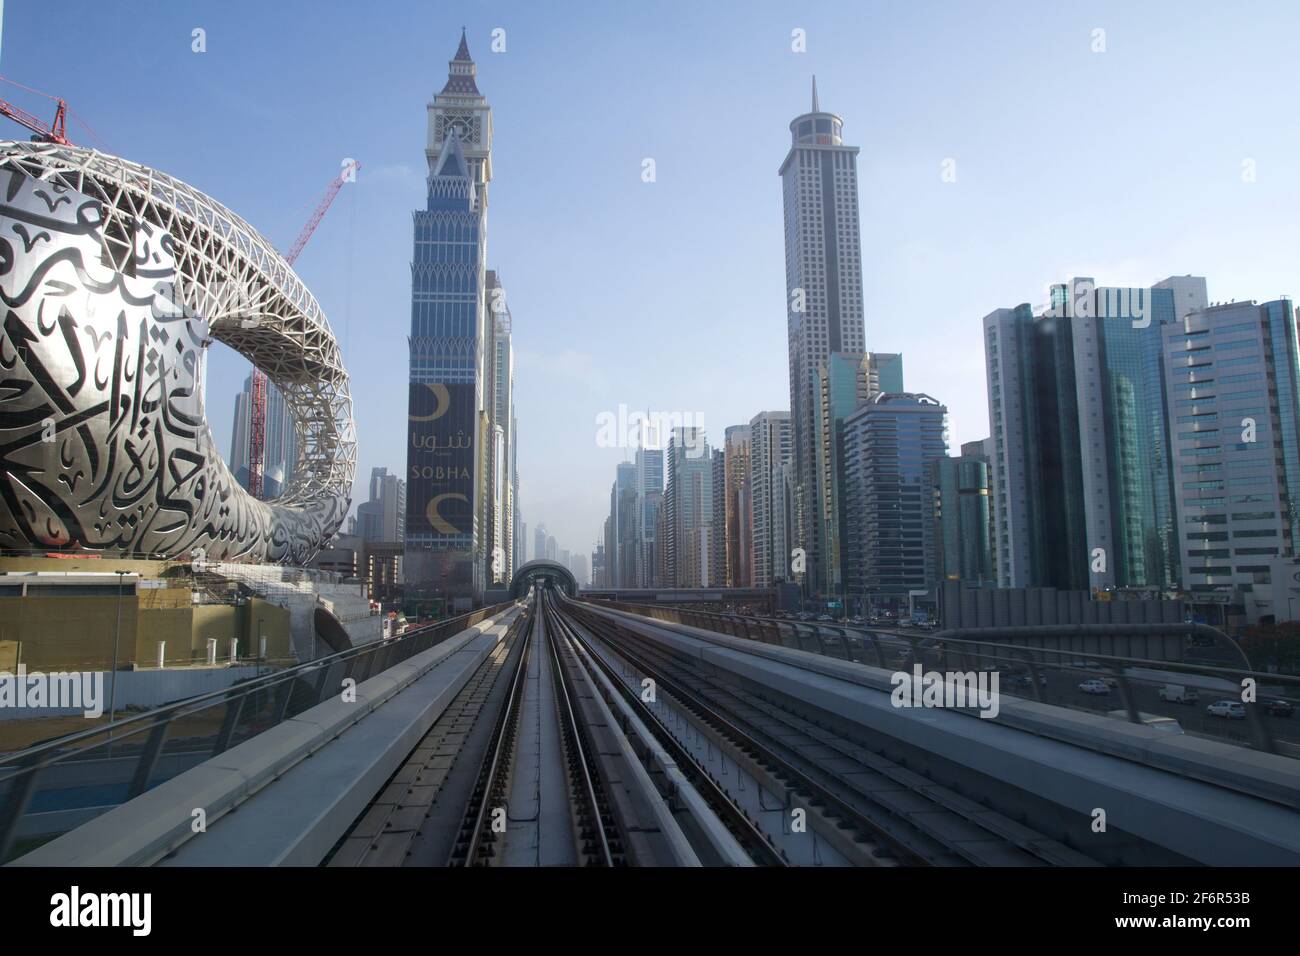 DUBAI, UNITED ARAB EMIRATES - JUN 19, 2019: Metro subway tracks of Dubai Metro along Sheikh Zayed Road with station ahead. Stock Photo